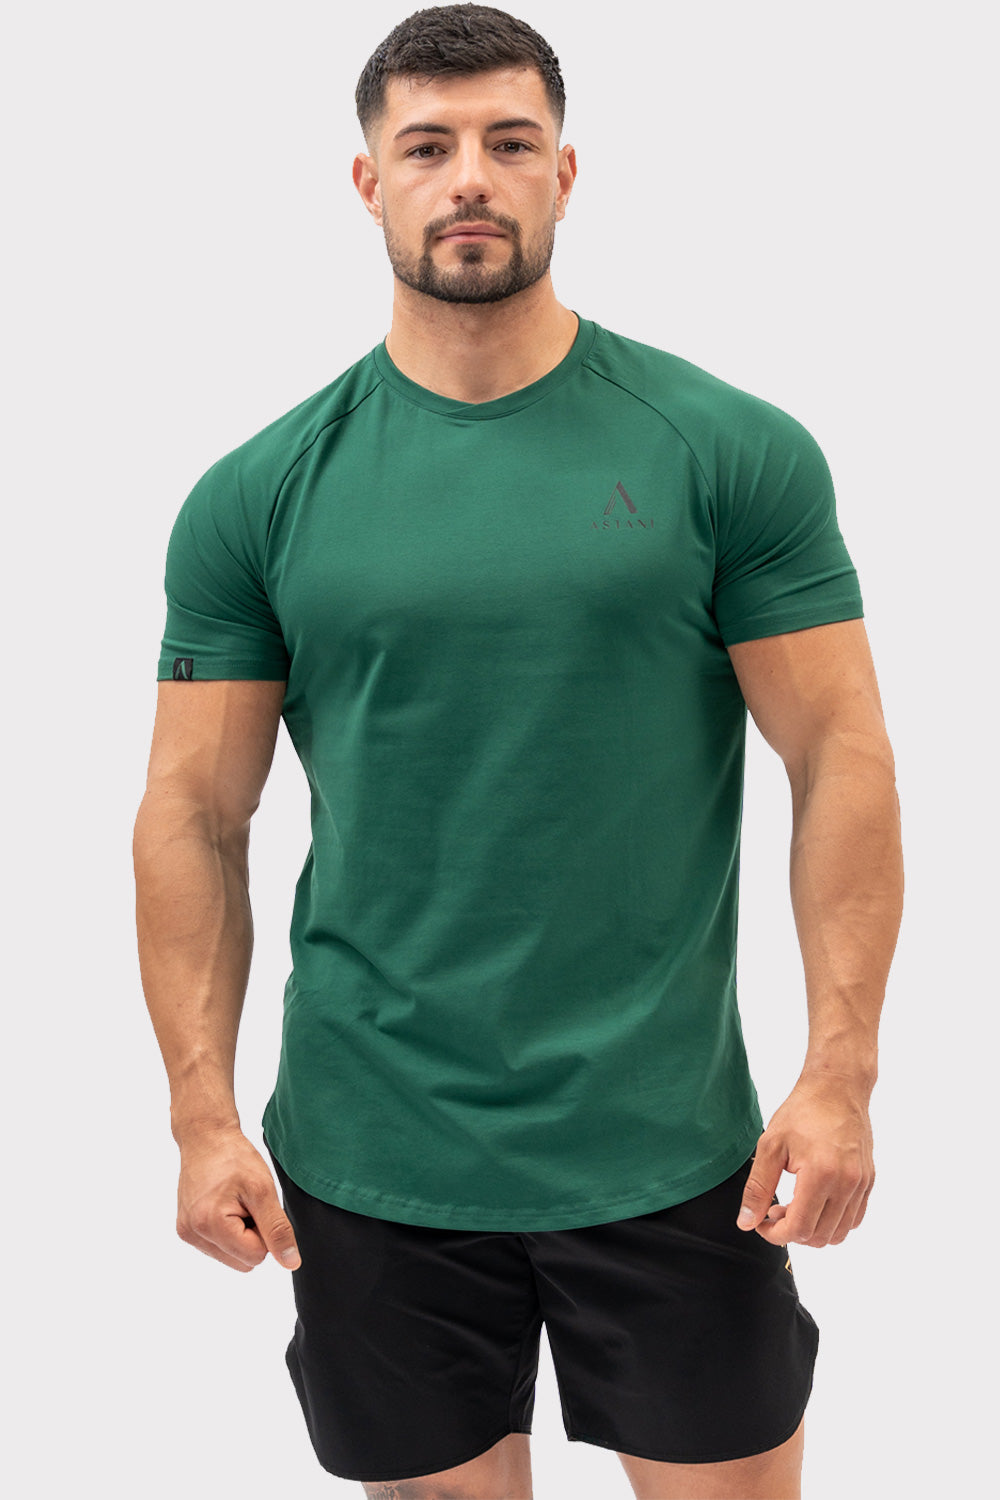  A CODE T-Shirt - Verde Escuro